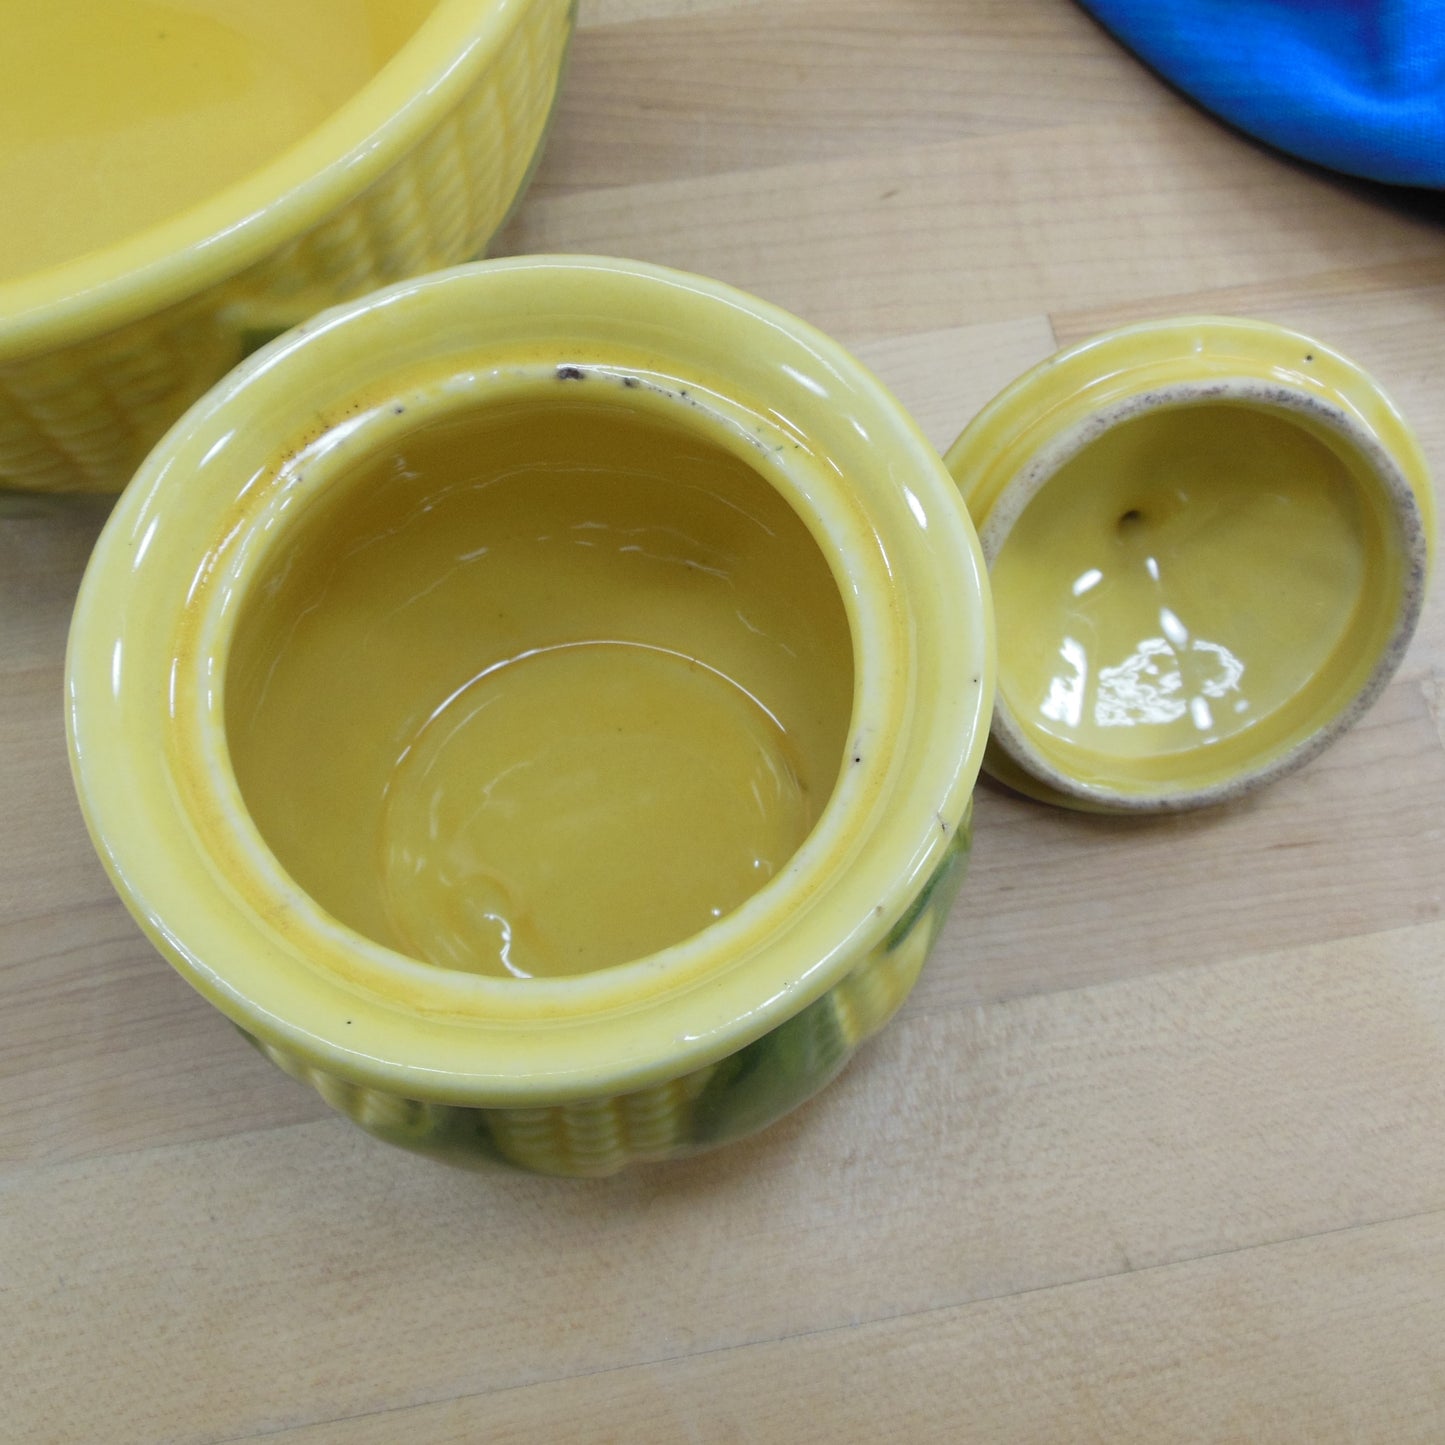 Shawnee Pottery Corn Pattern Mixing Bowl 8" and Sugar Bowl Used